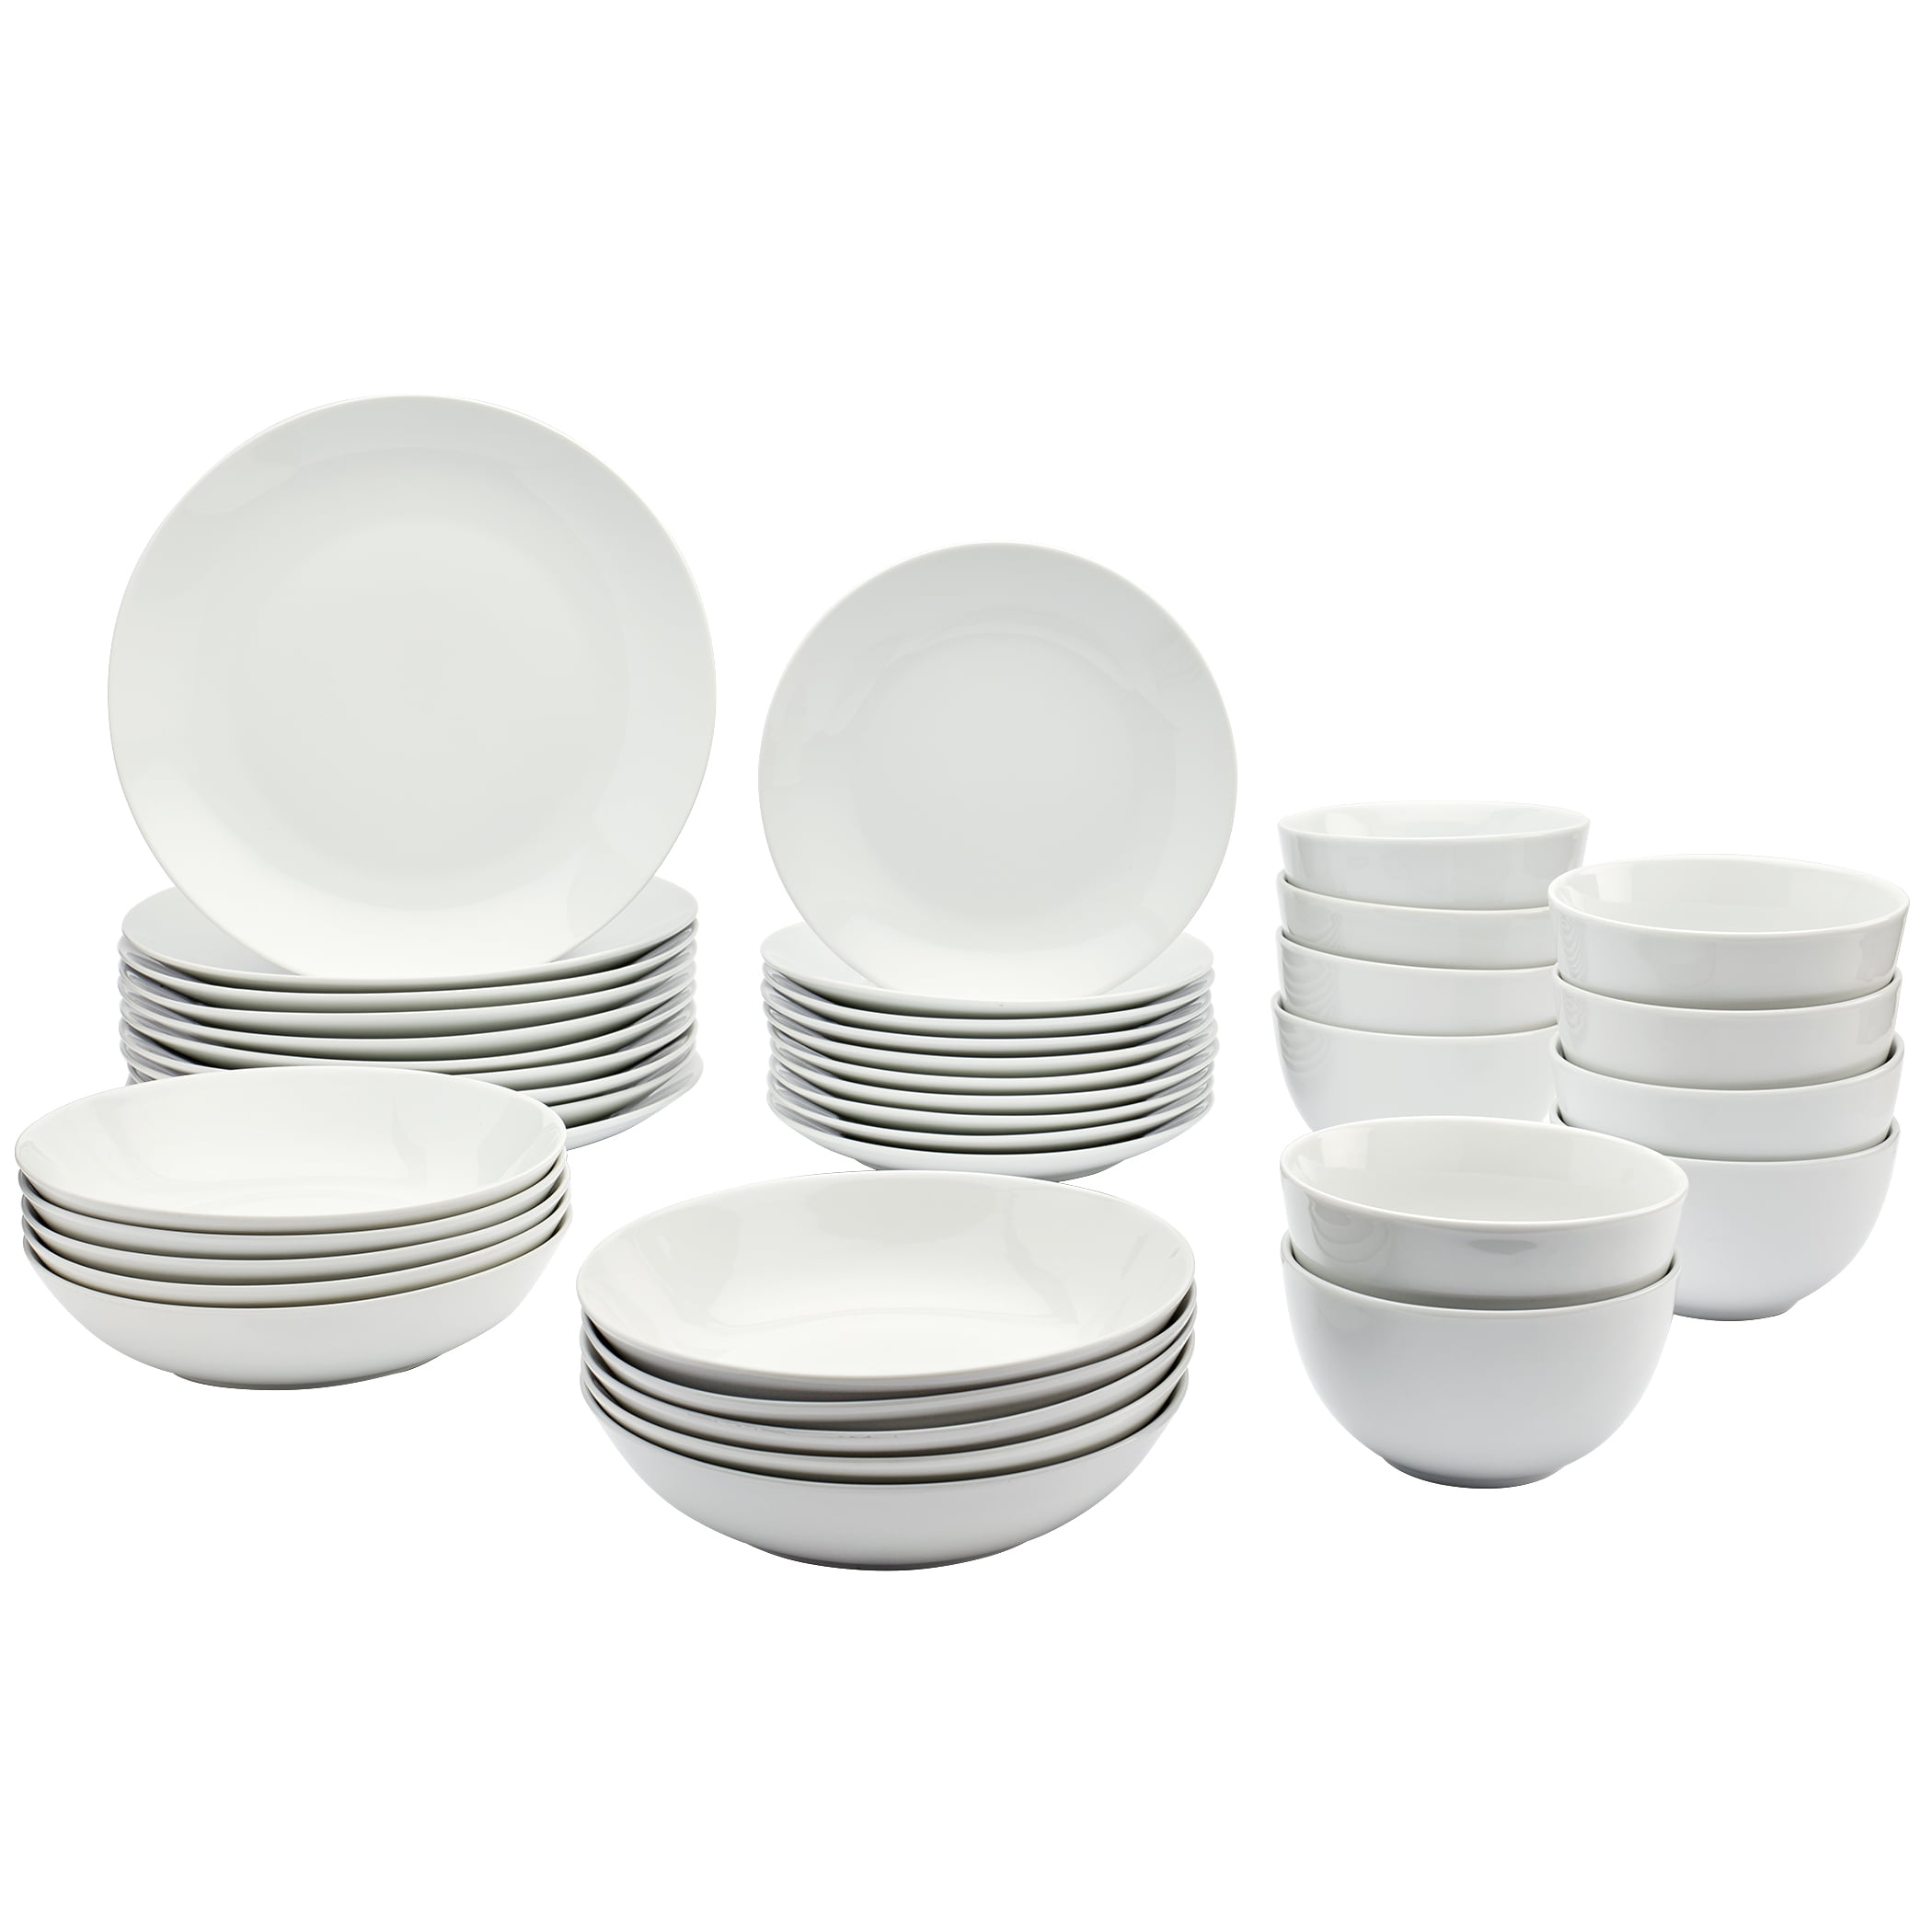 40-Piece Dinnerware Set White Ceramic Kitchen Dish Dinner Plates Mugs Bowl Cup 